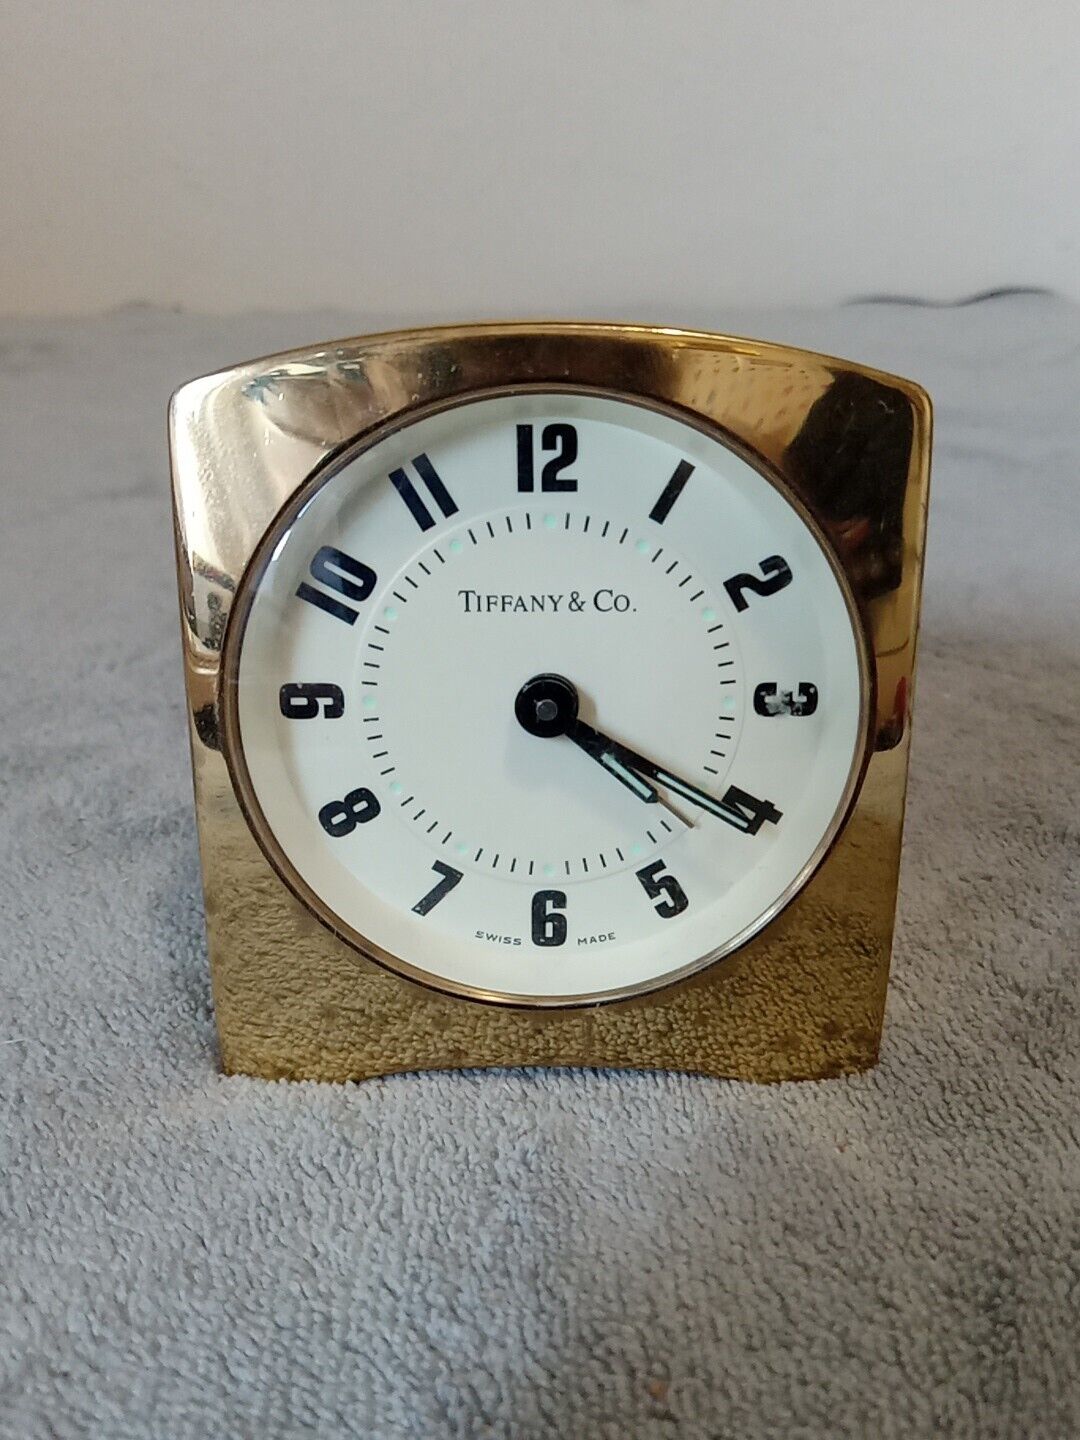 VTG Tiffany & Co Small Square Travel Alarm Clock Quartz Solid Brass Swiss Made